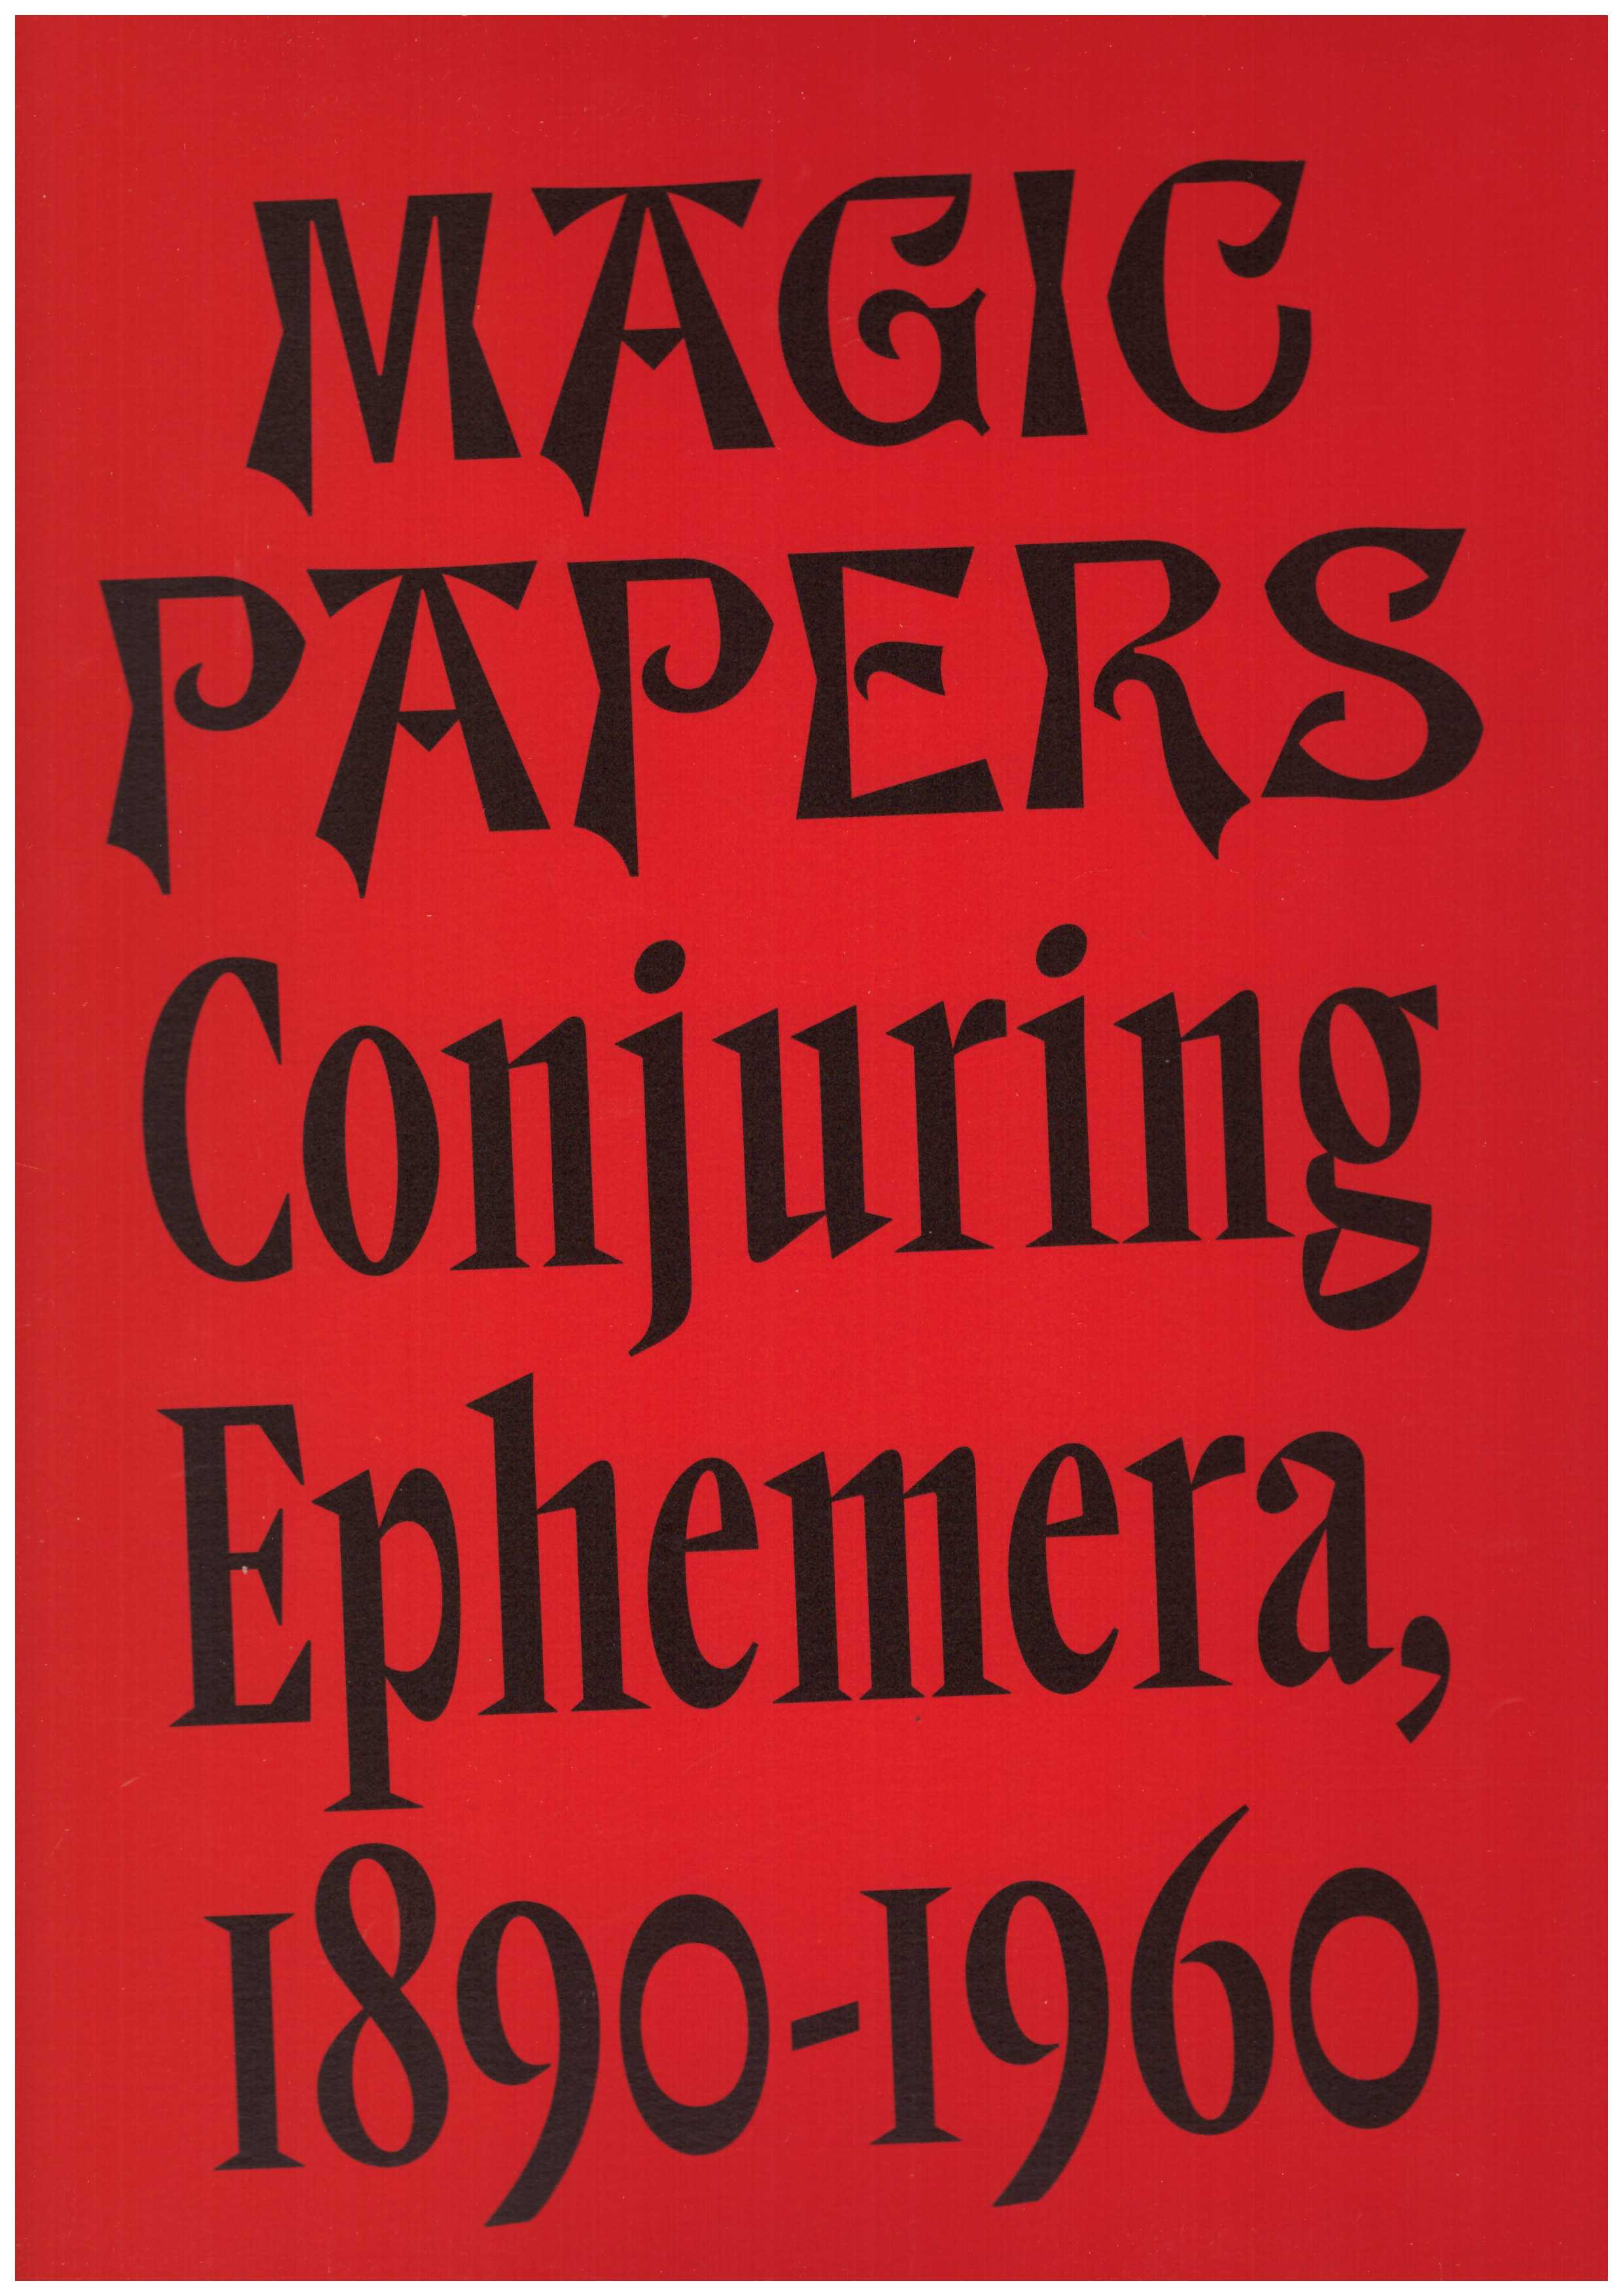 FRY, Patrick (ed) - Magic Papers. Conjuring Ephemera 1890–1960